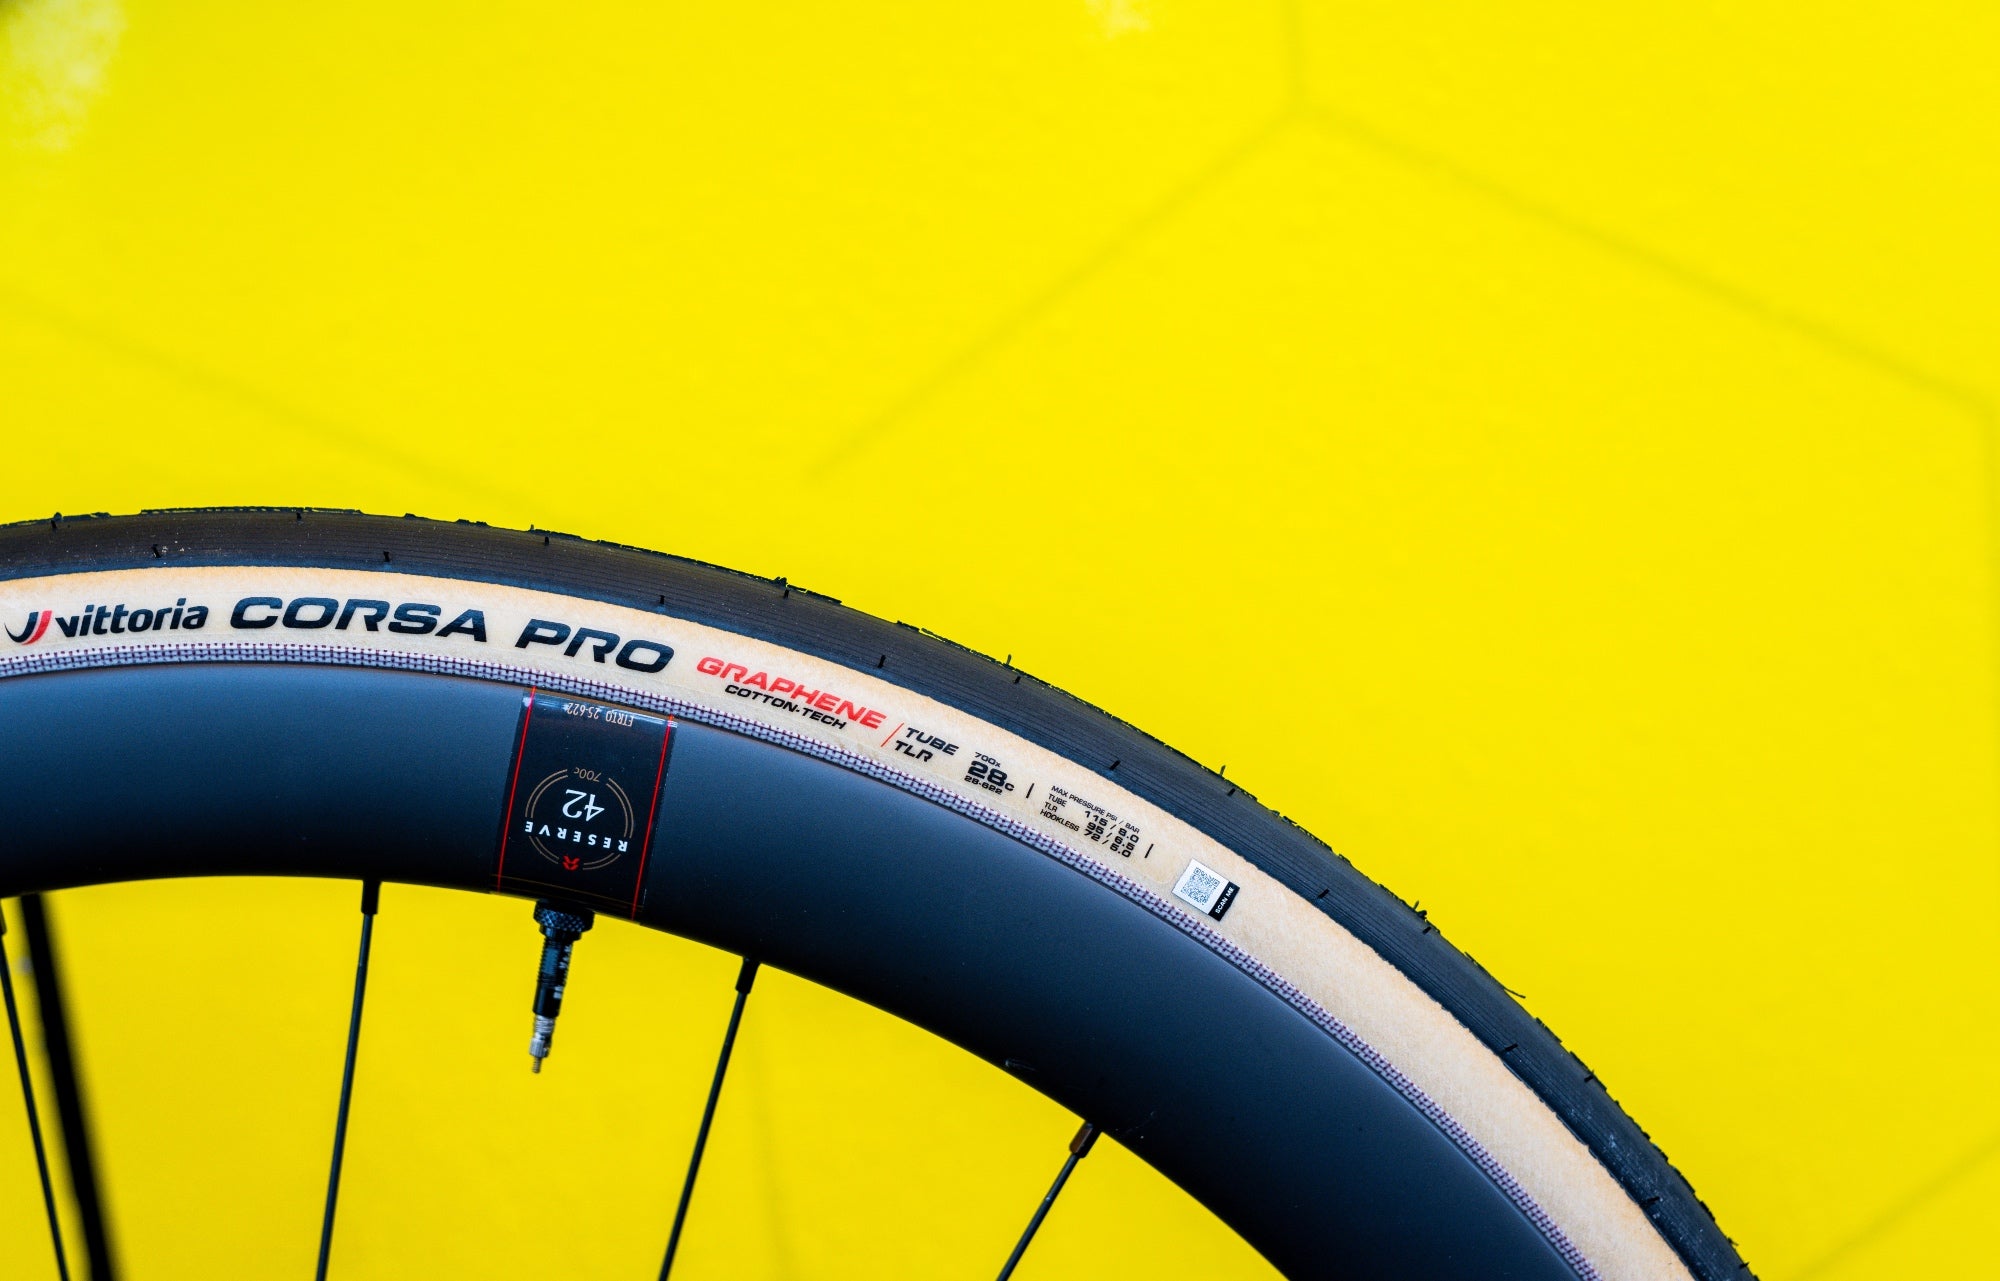 Reserve front wheel and Vittoria Corsa Pro tyre of Matteo Jorgenson's bike